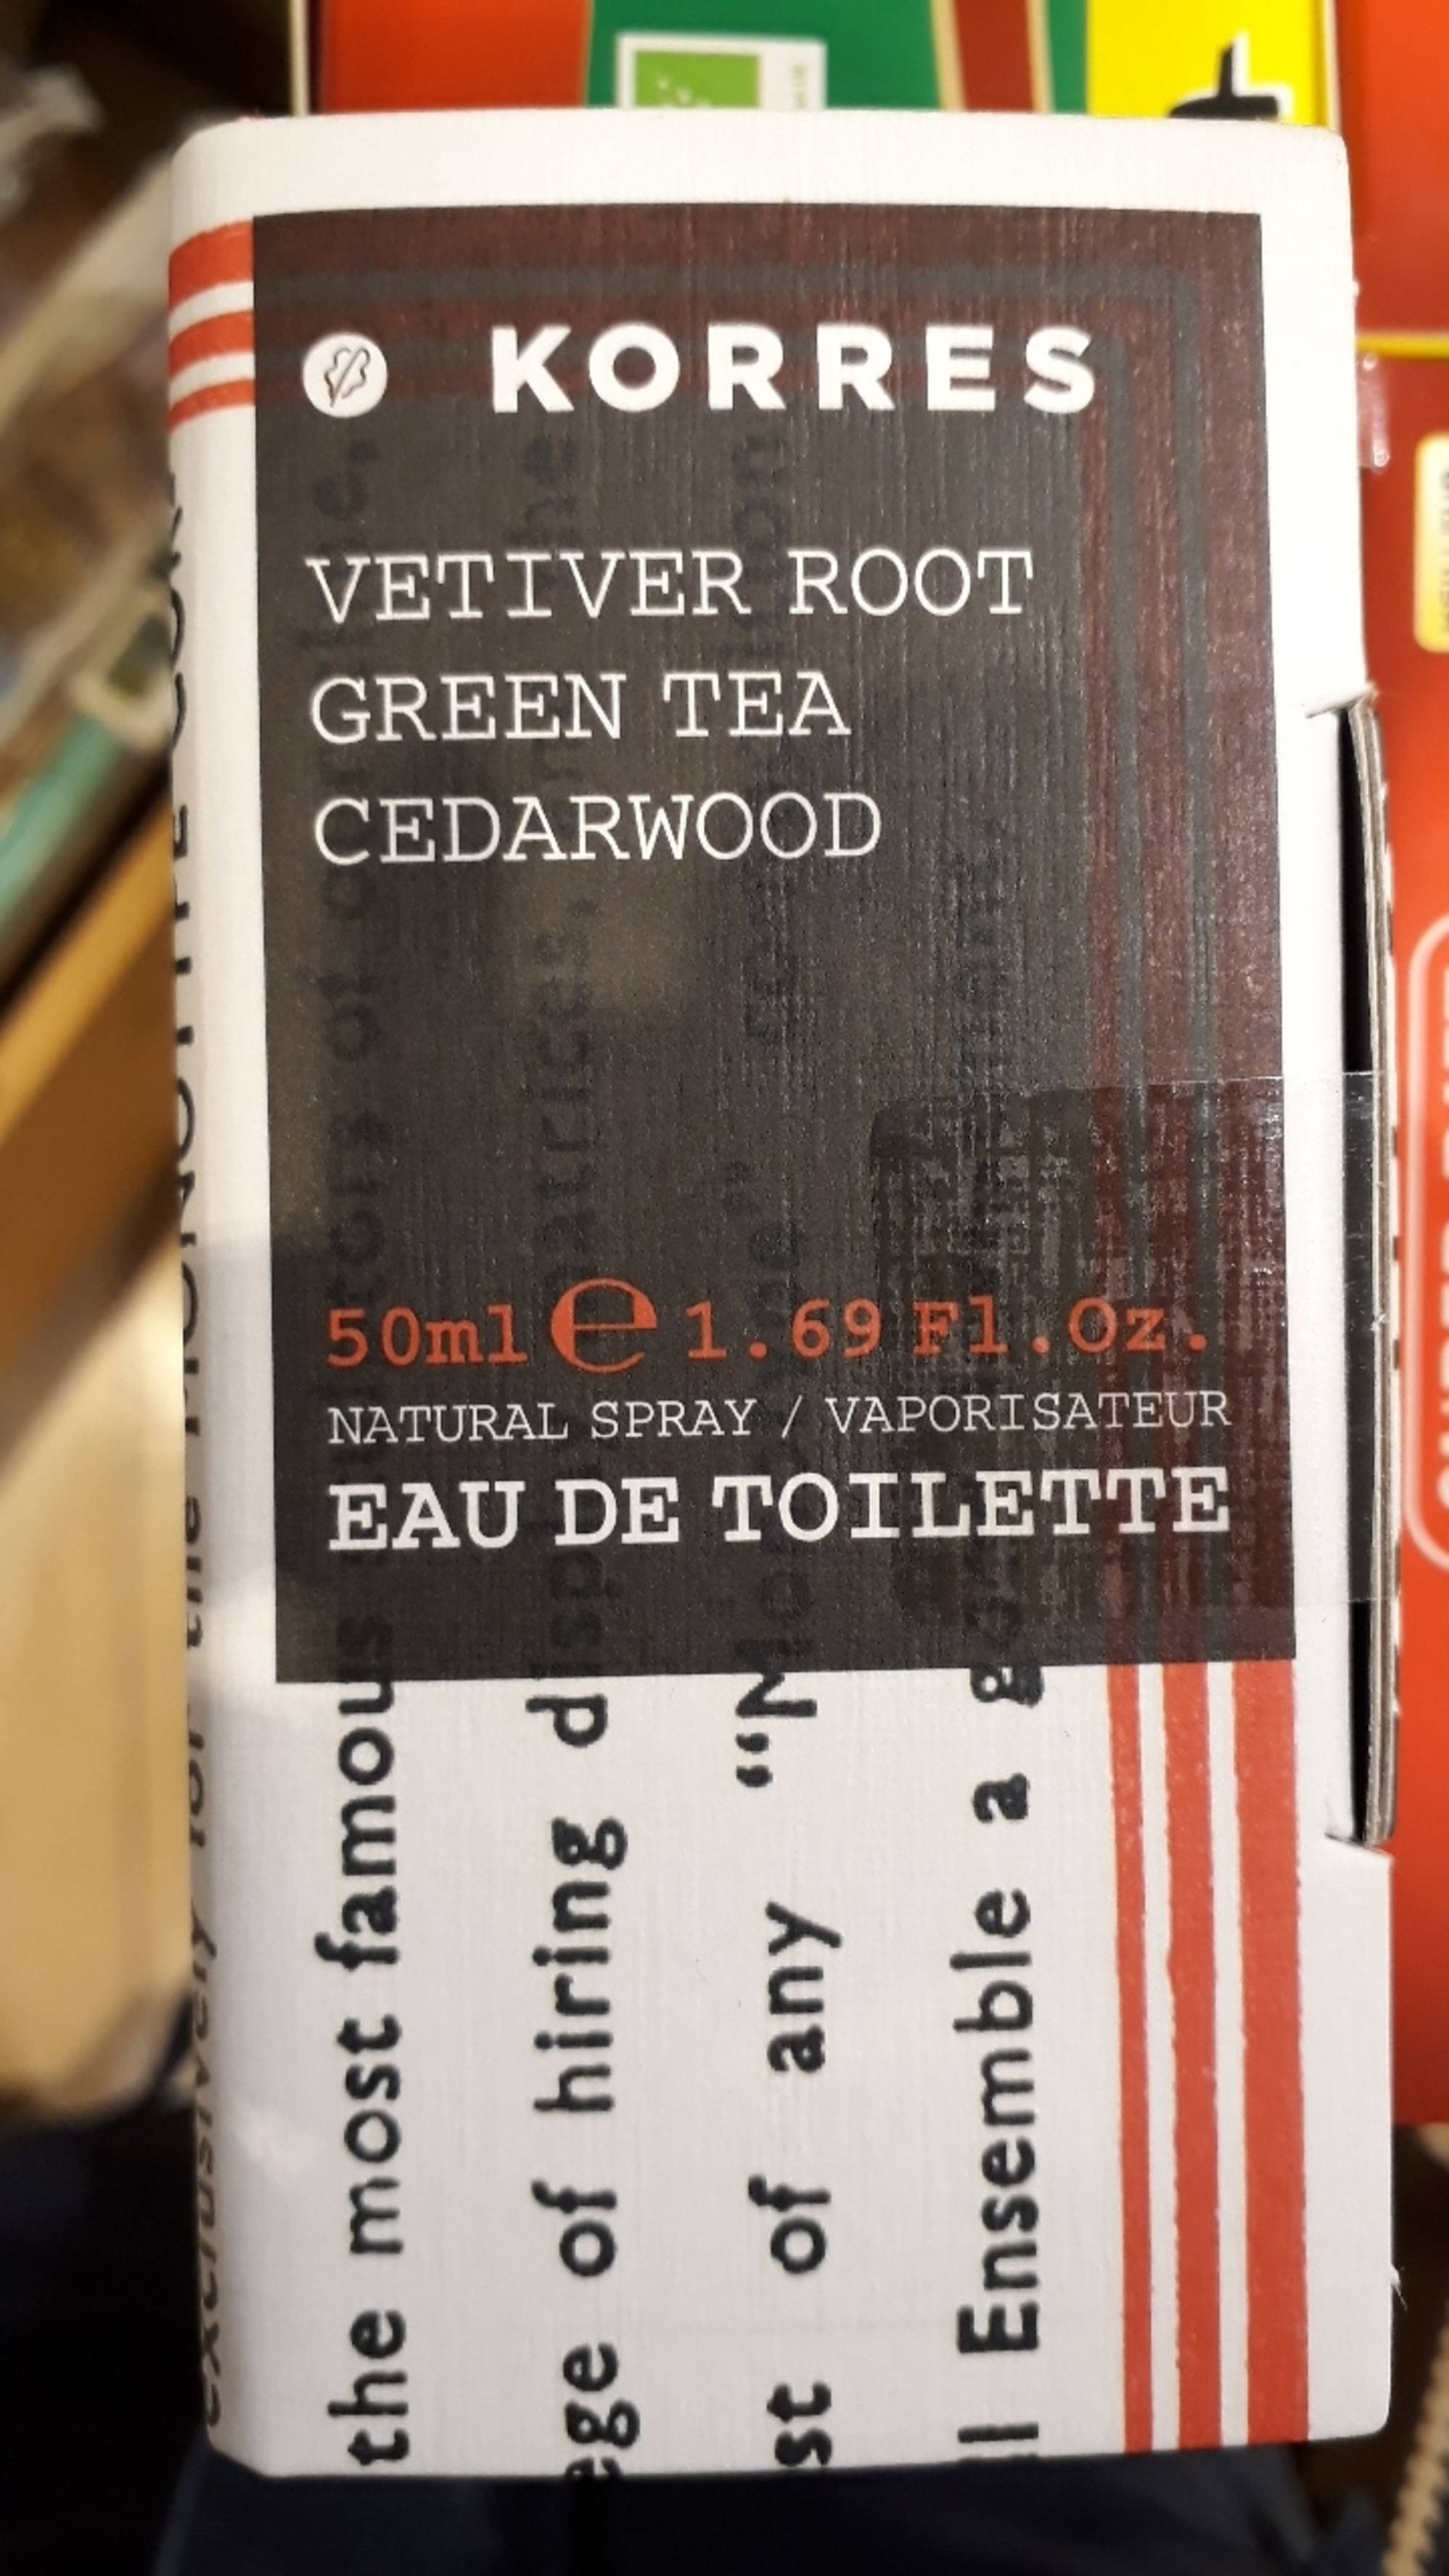 KORRES - Vetiver root green tea cedarwood - Eau de toilette